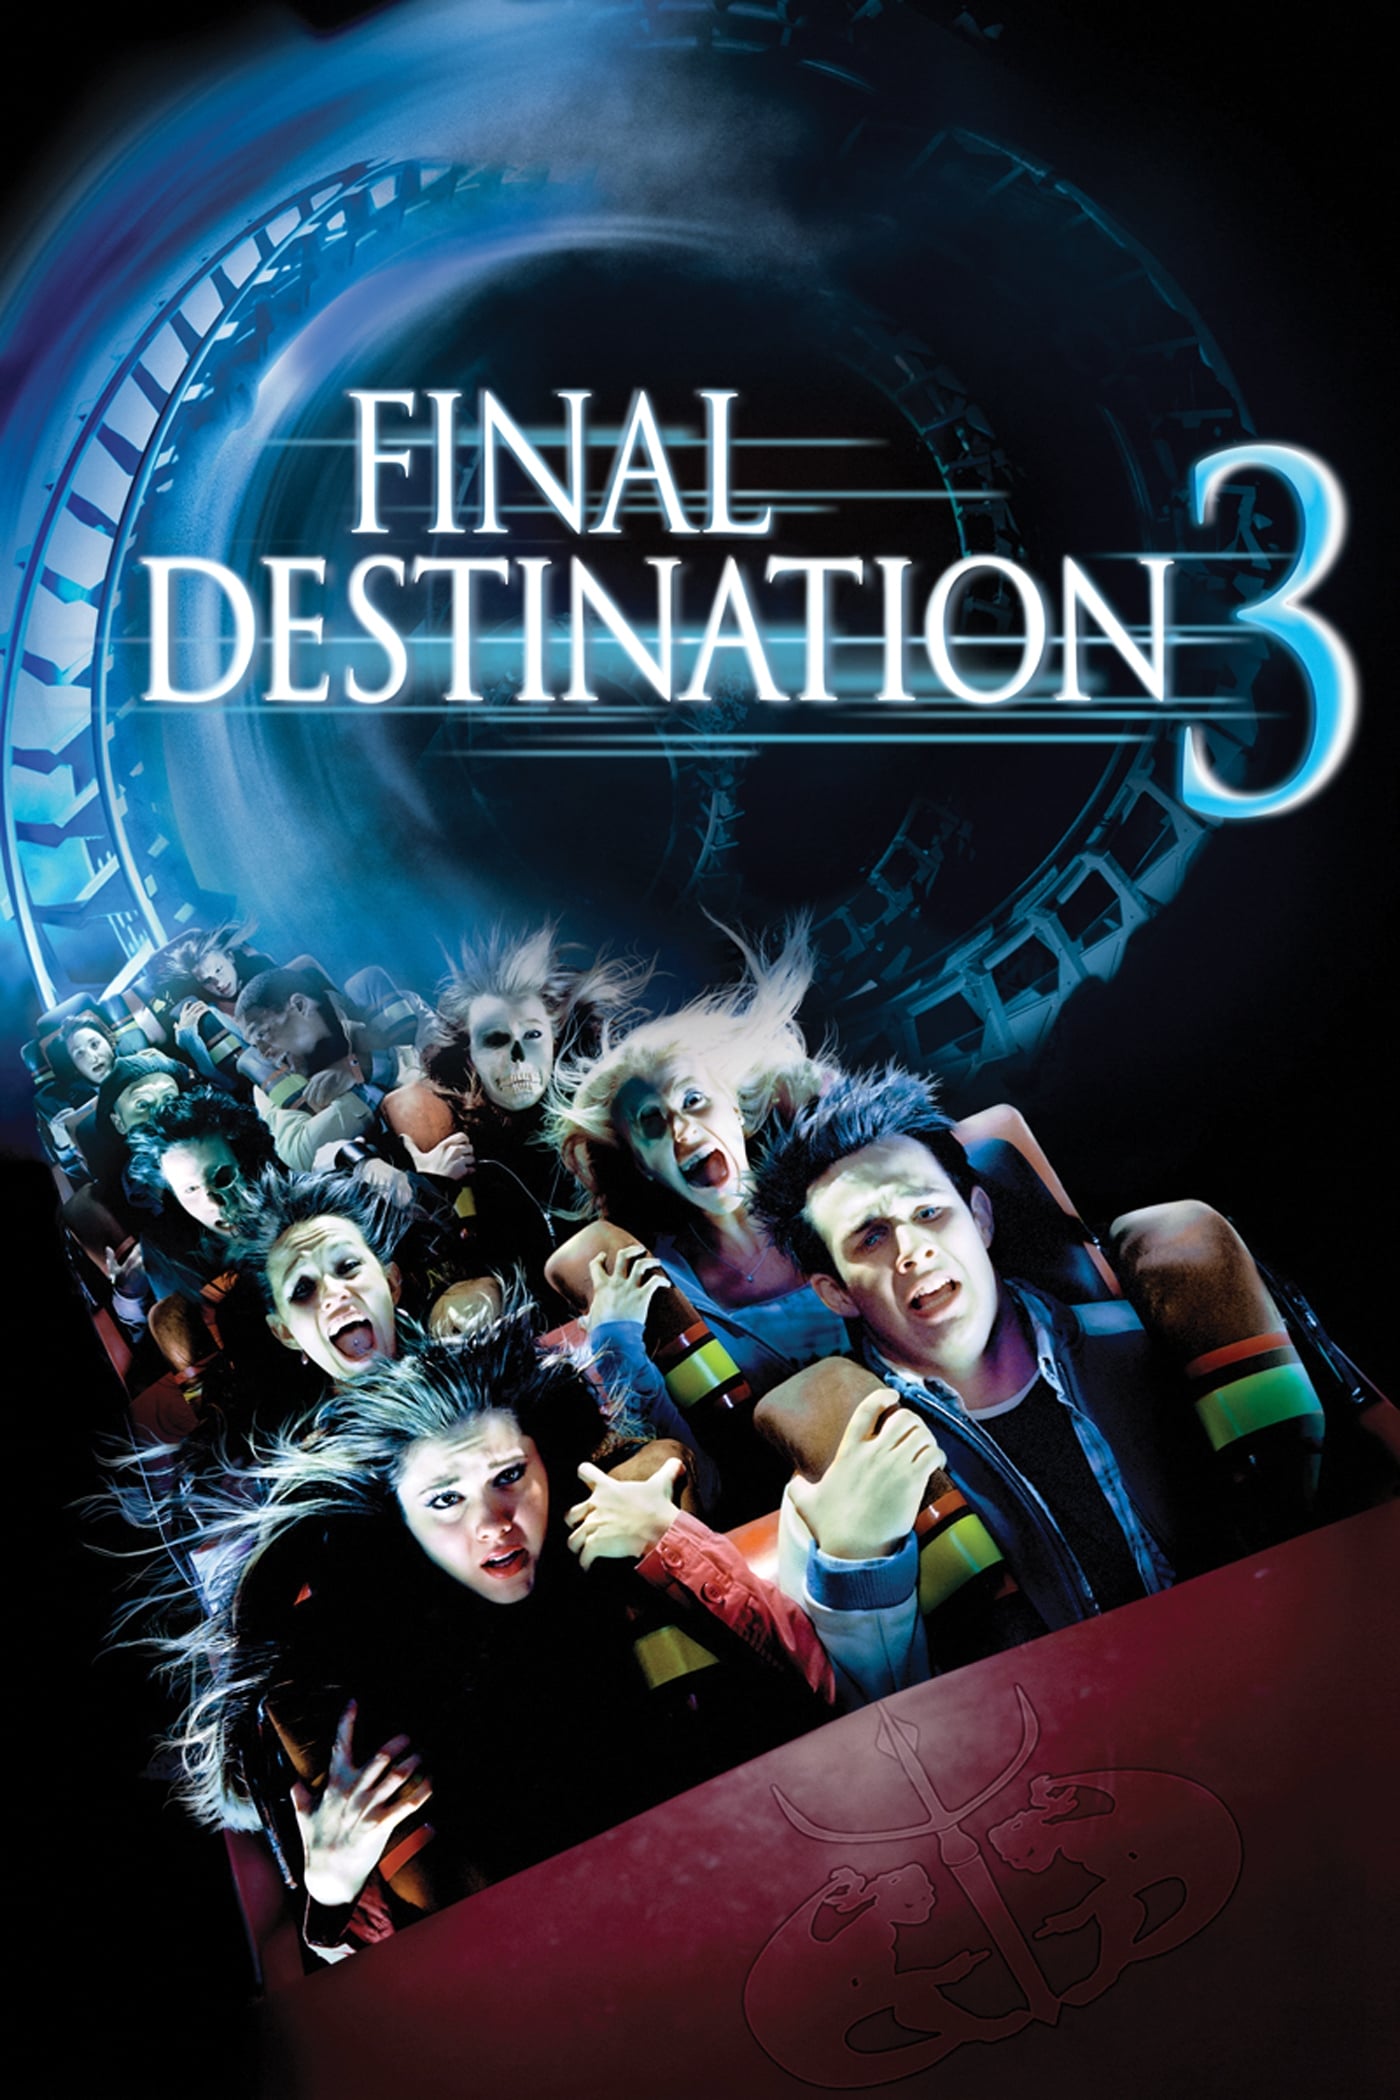 Lưỡi Hái Tử Thần 3 – Final Destination 3 (2006) Full HD Vietsub